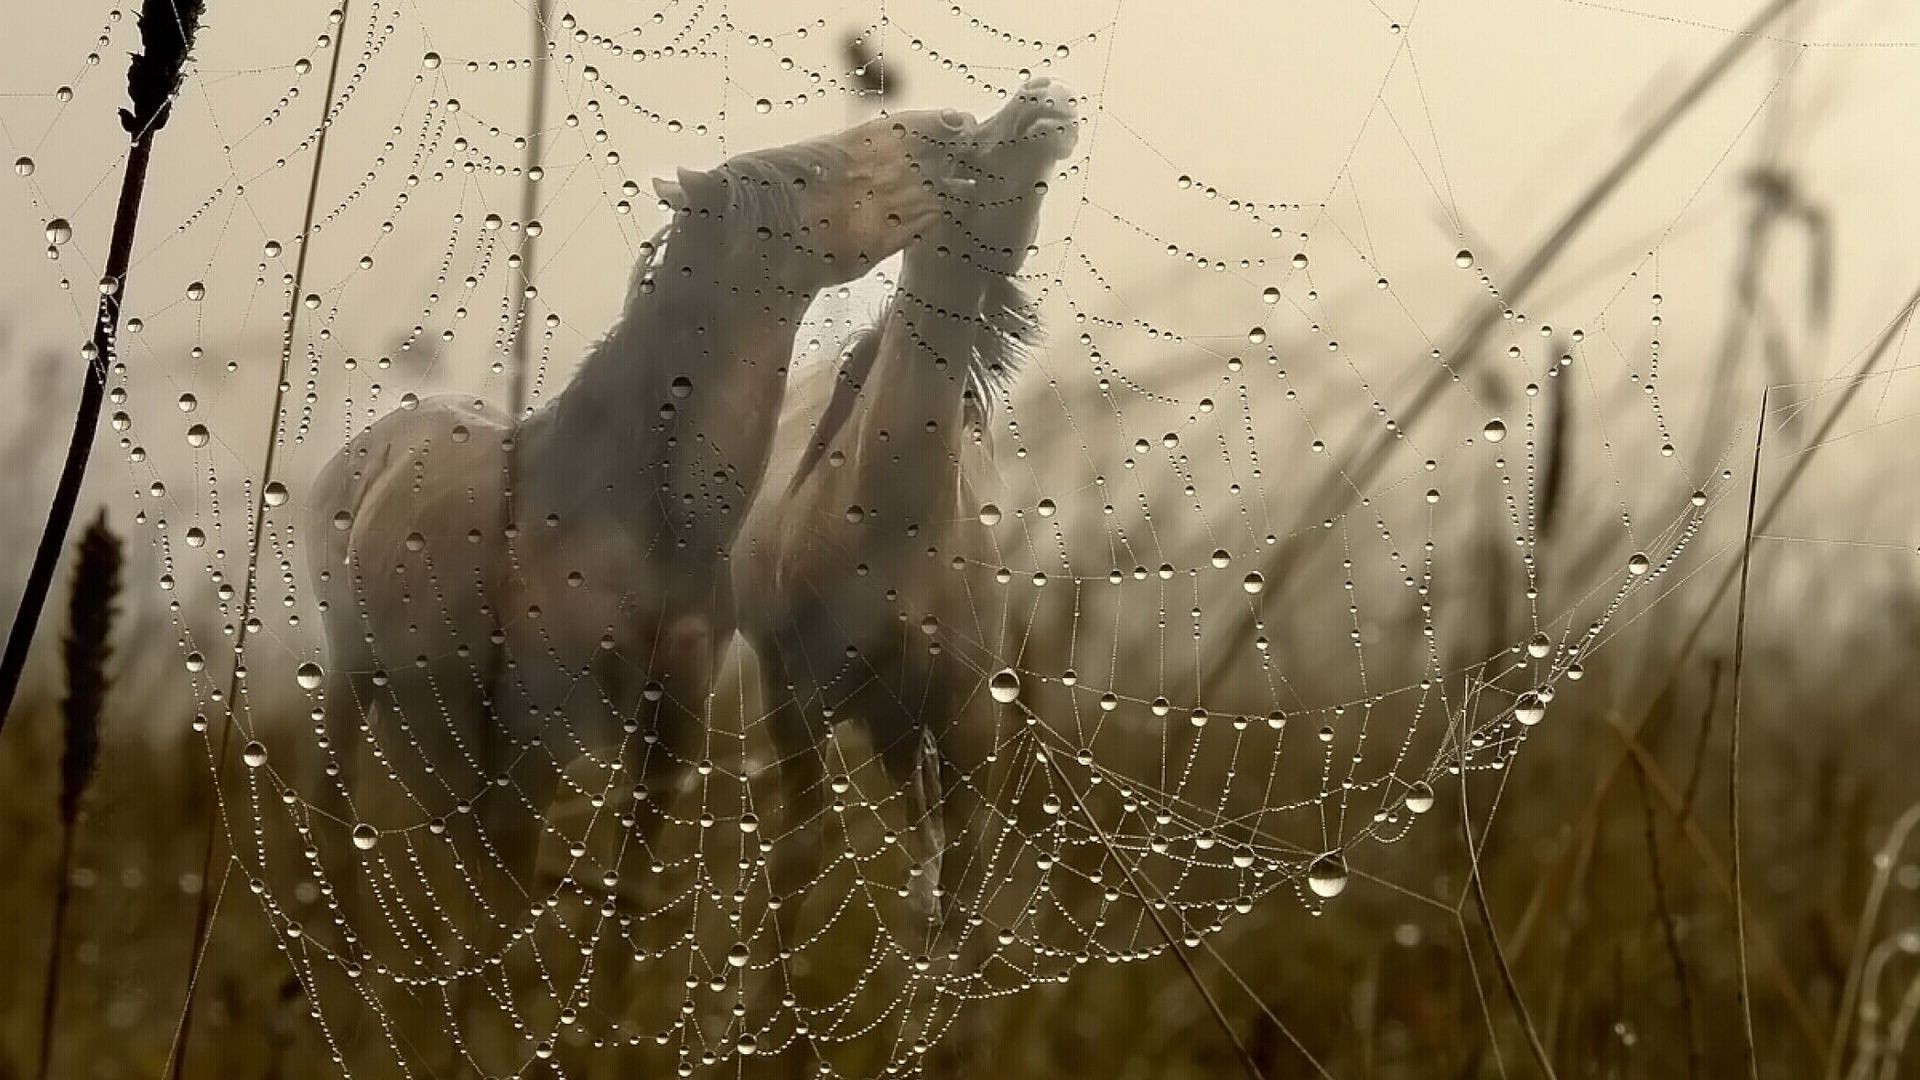 horses spider spiderweb cobweb trap dew arachnid web drop nature rain danger dawn intricacy drip pattern desktop abstract wet